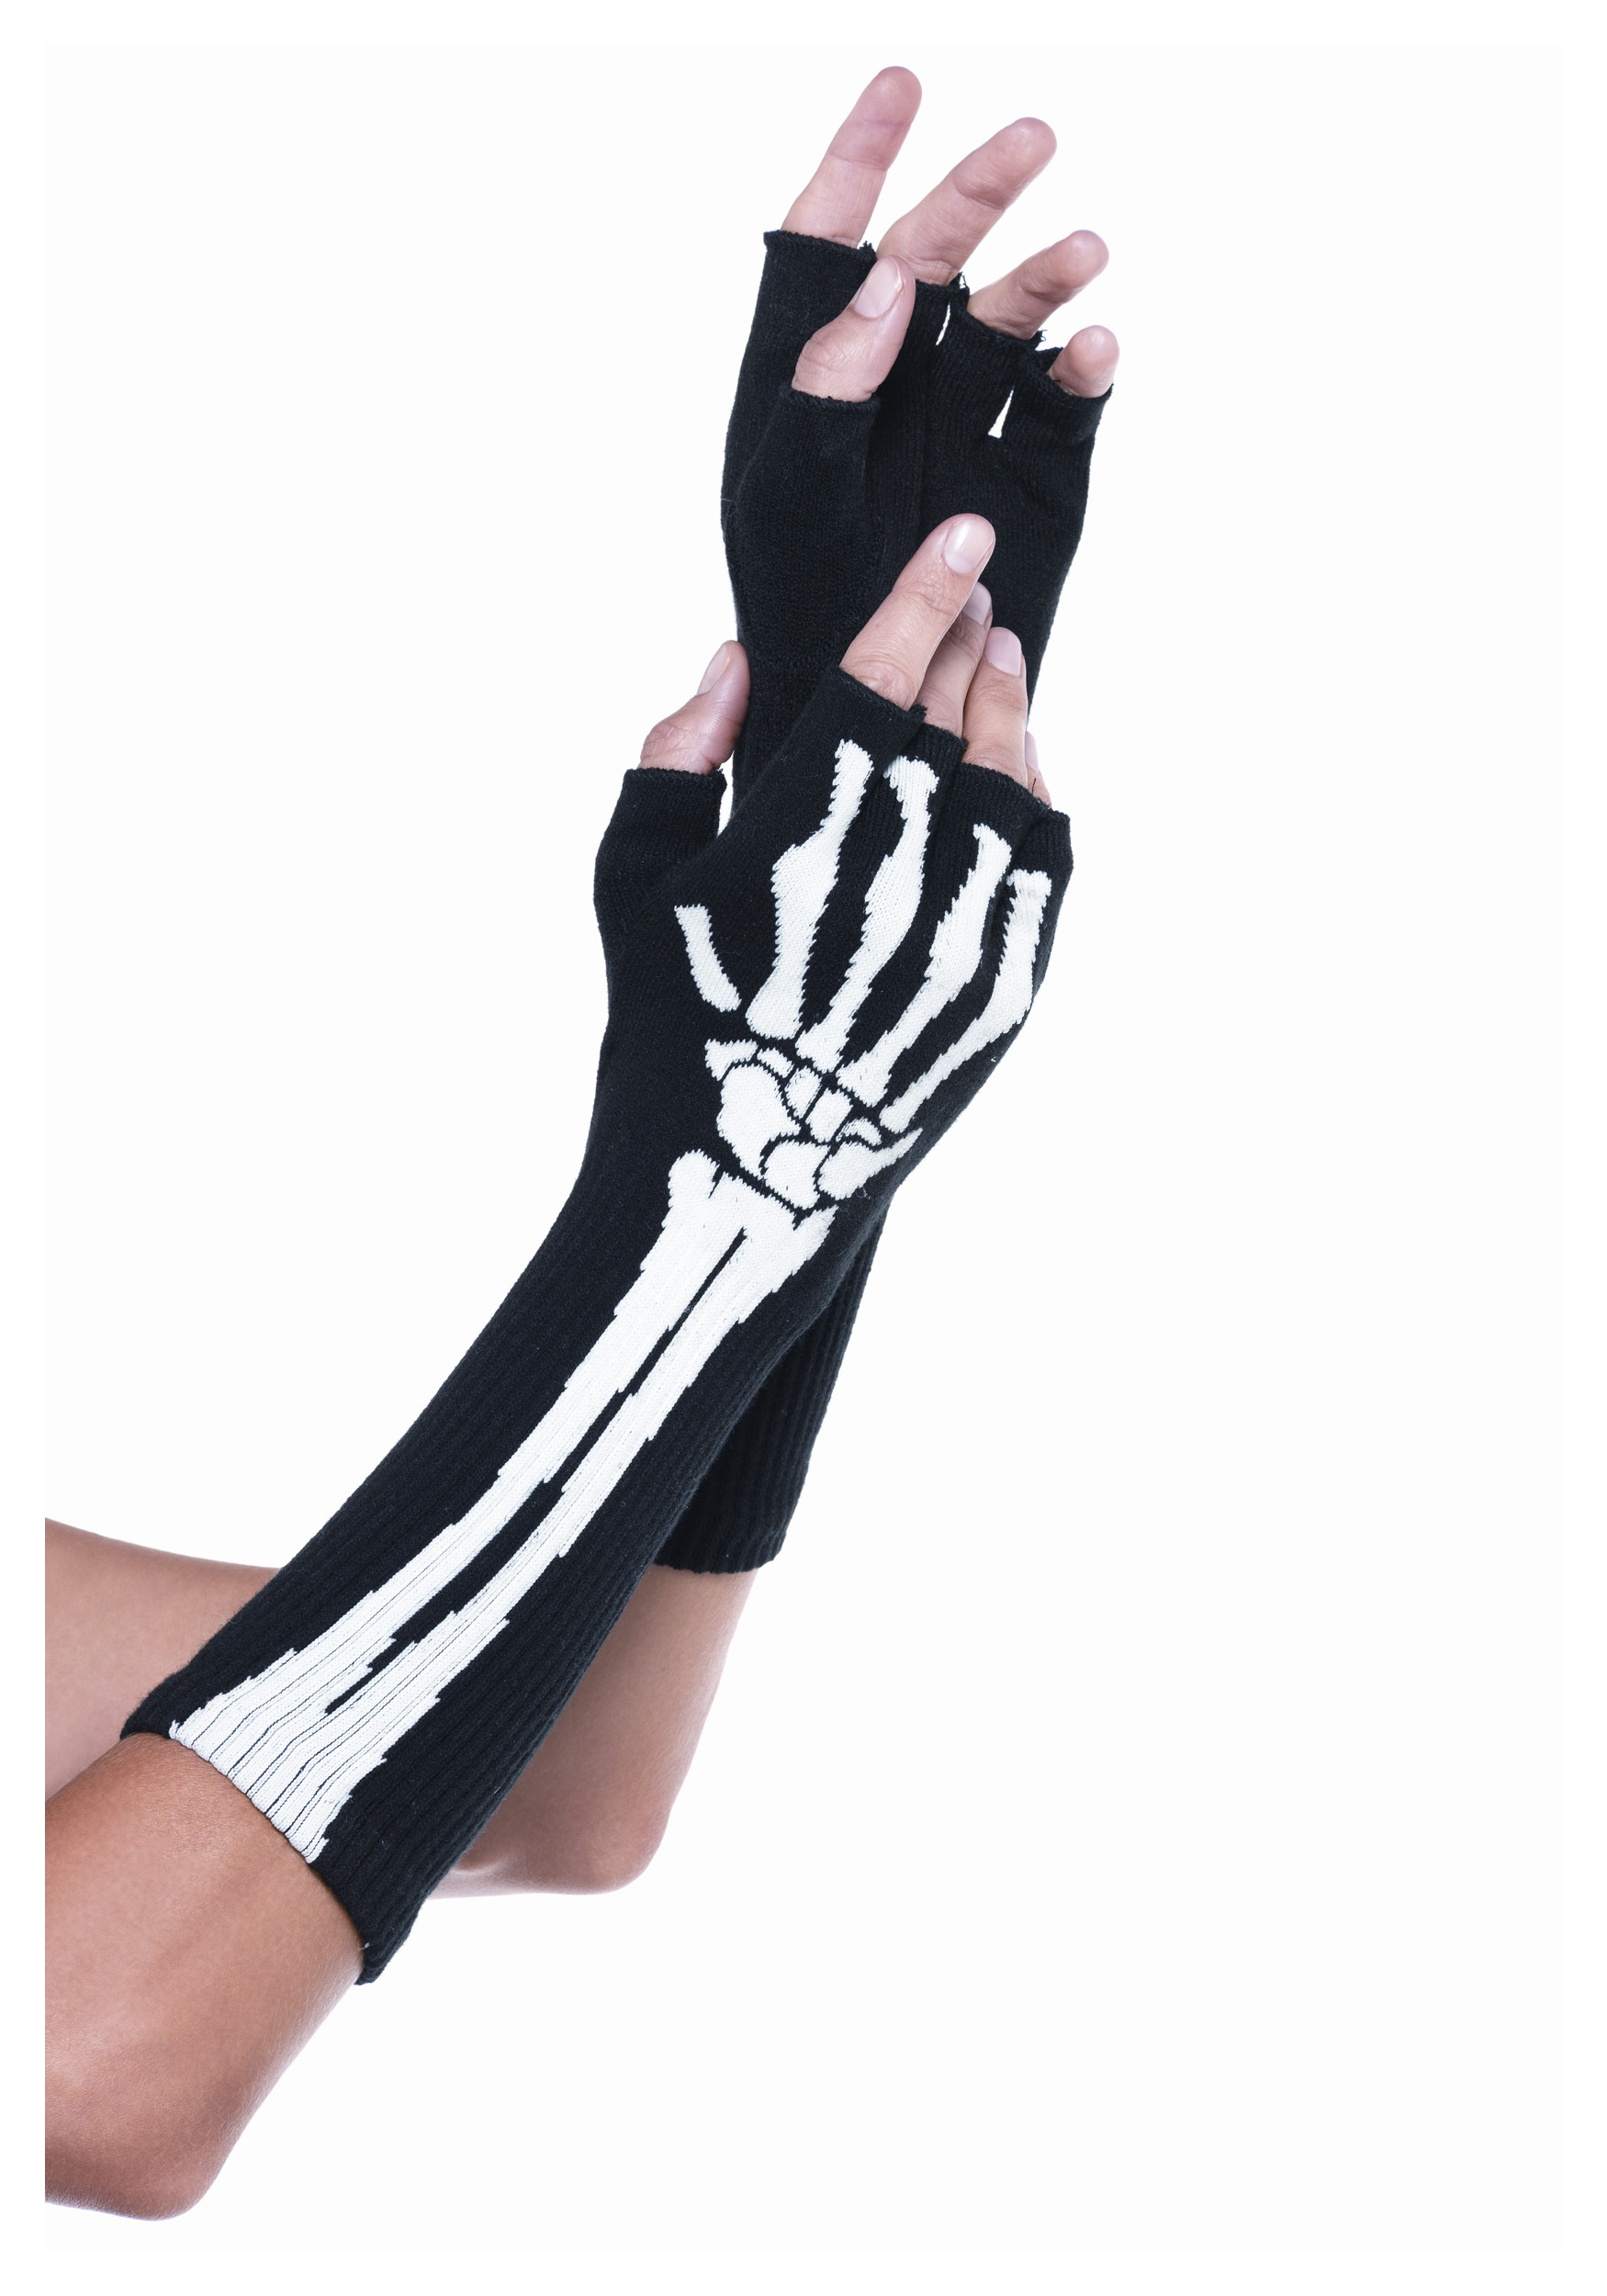 https://images.halloweencostumes.com.mx/products/13793/1-1/guantes-sin-dedos-de-esqueleto.jpg